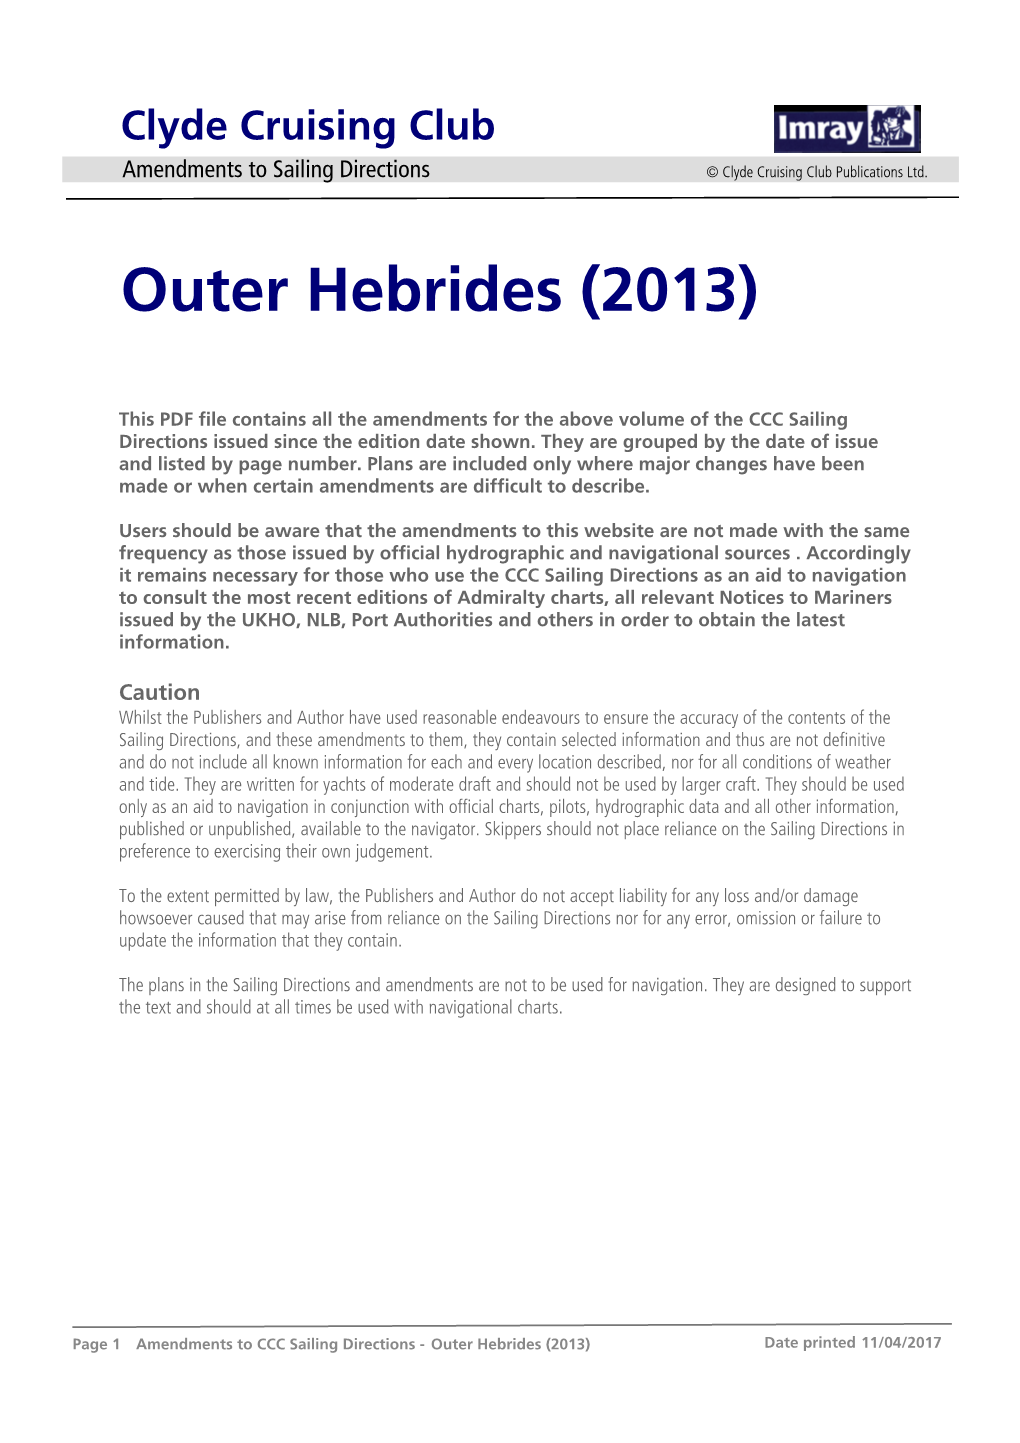 Outer Hebrides (2013)